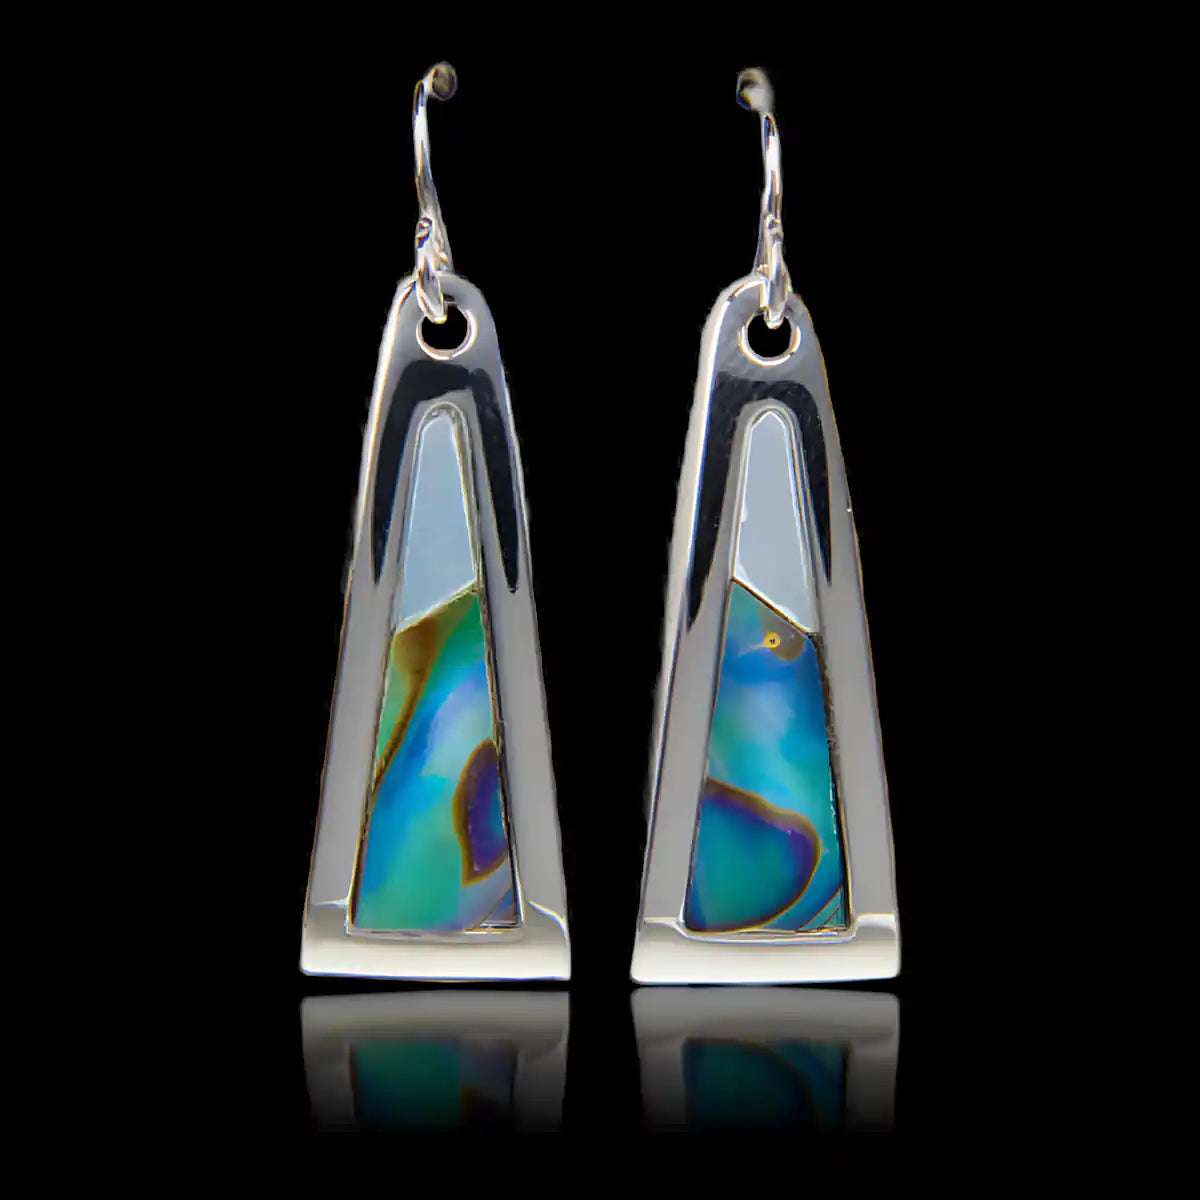 Glacier pearle dawn earrings